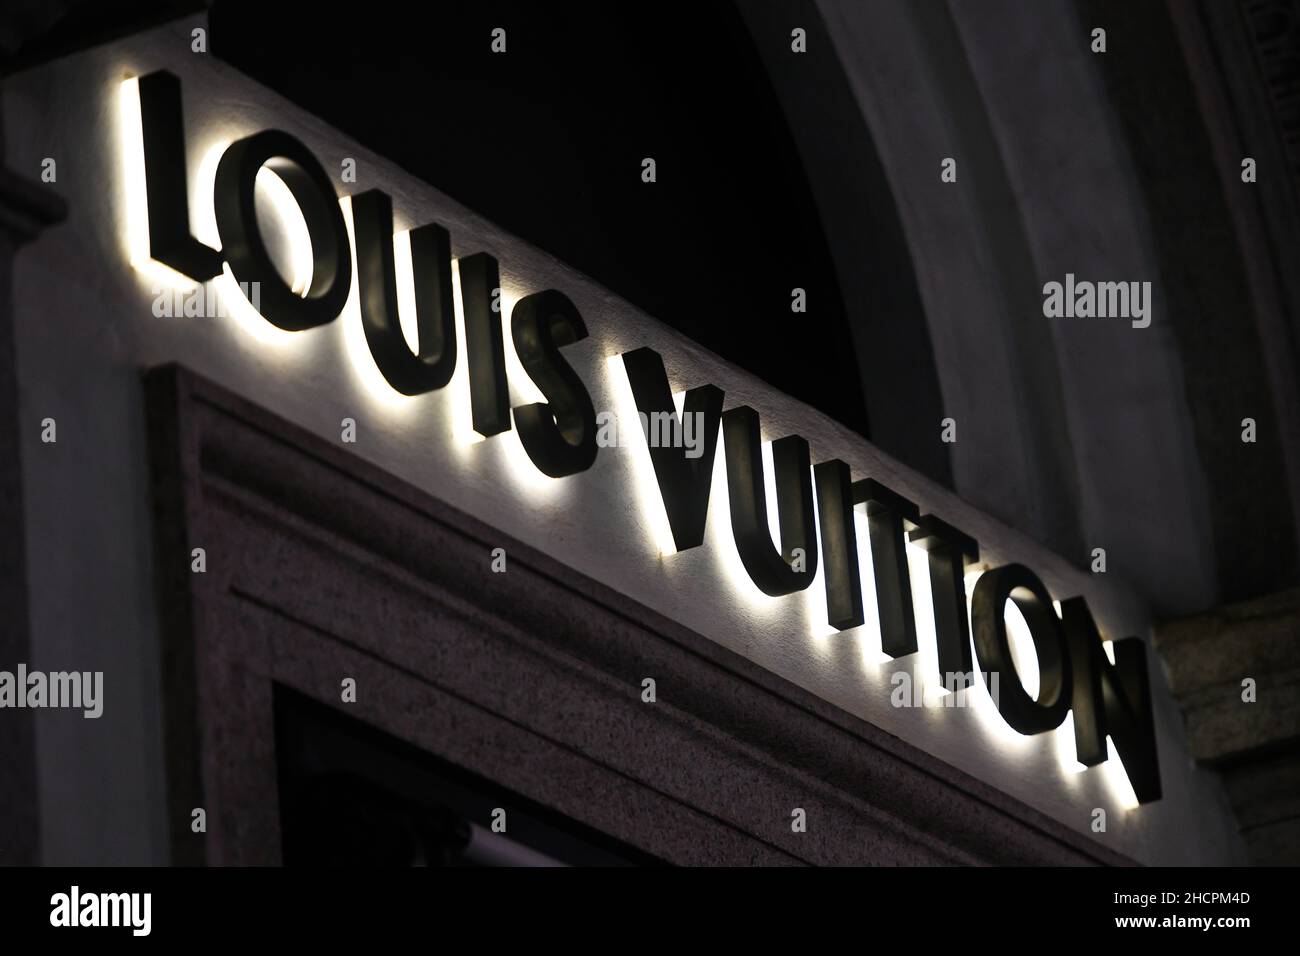 Milan, Italy - September 24, 2021: Louis Vuitton logo displayed on a facade of a store in Milan. Stock Photo